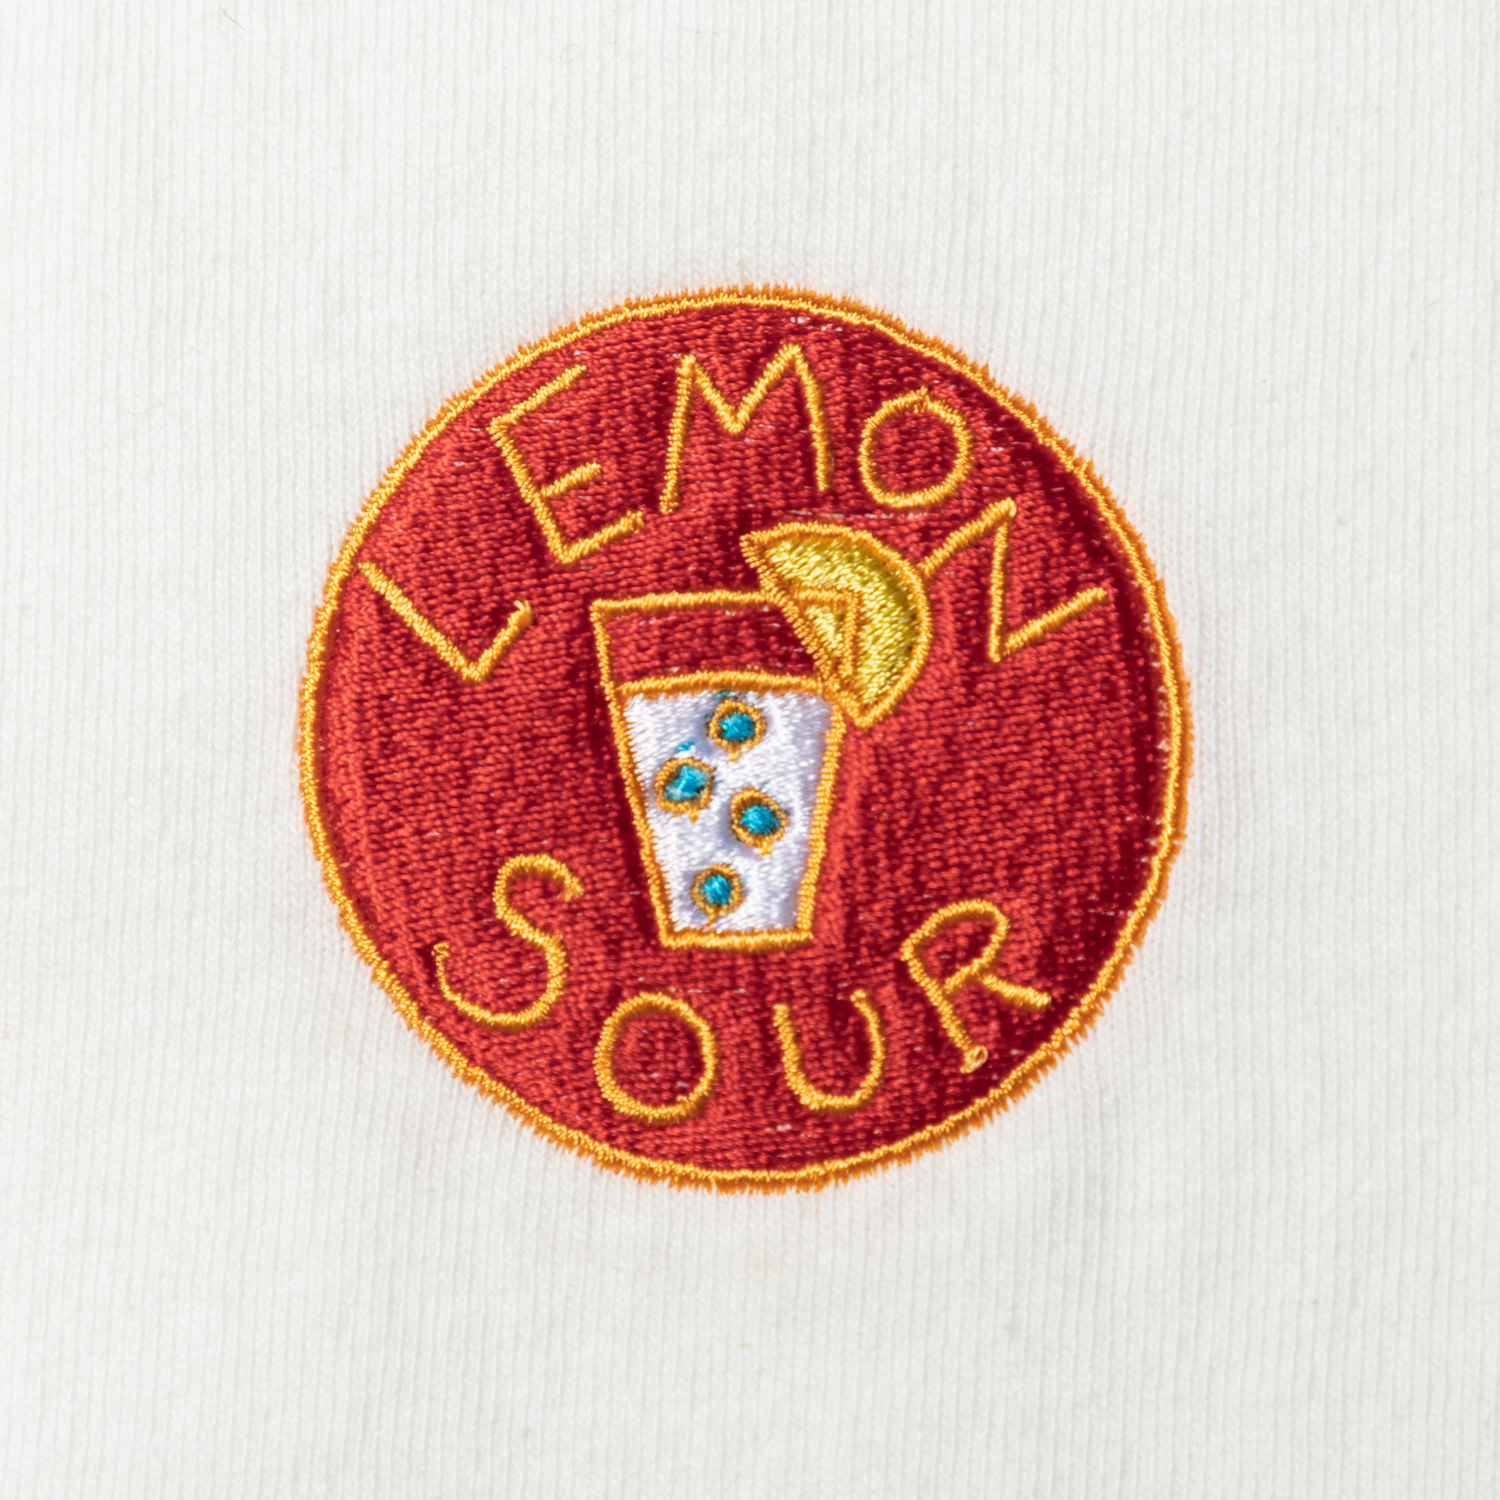 LEMON SOUR embroidery SS designed by Tomoo Gokita